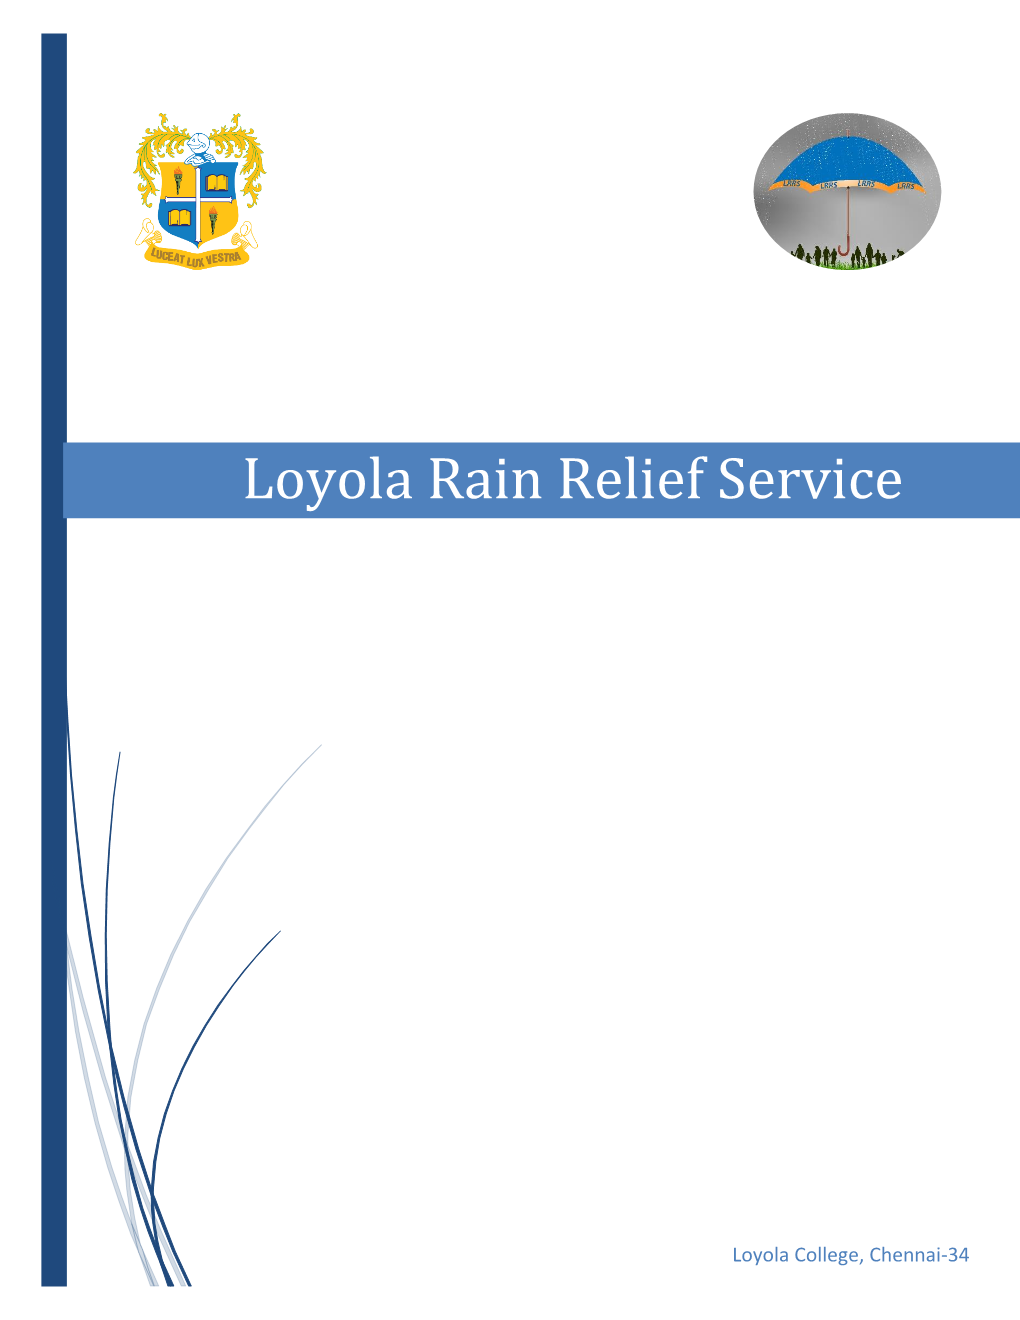 Loyola Rain Relief Service (Lrrs) - 2015